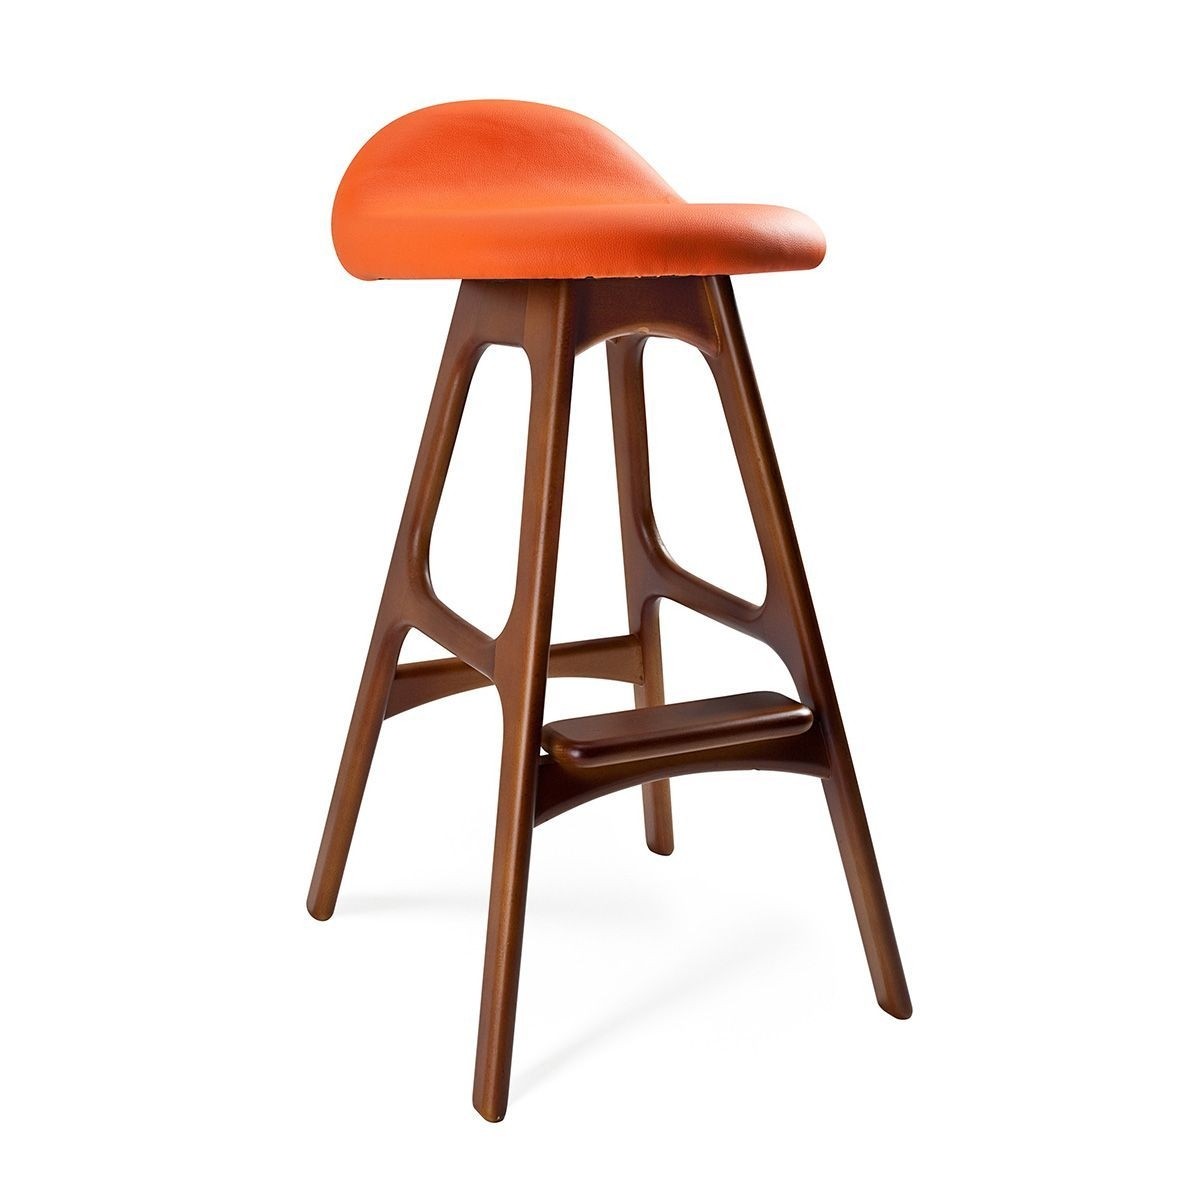 Modern orange bar stools